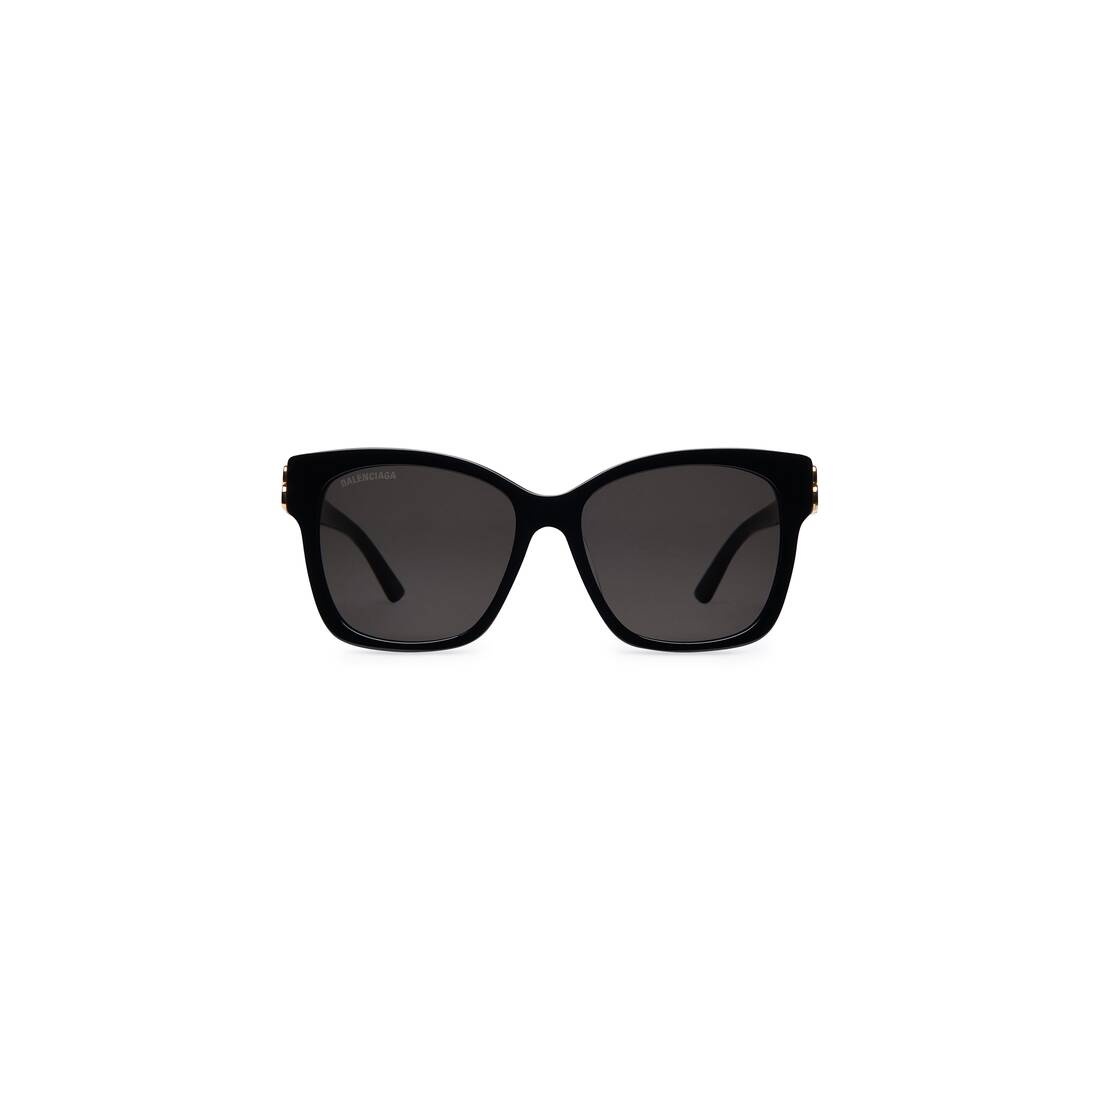 Women's Dynasty Square Sunglasses in Black - 1